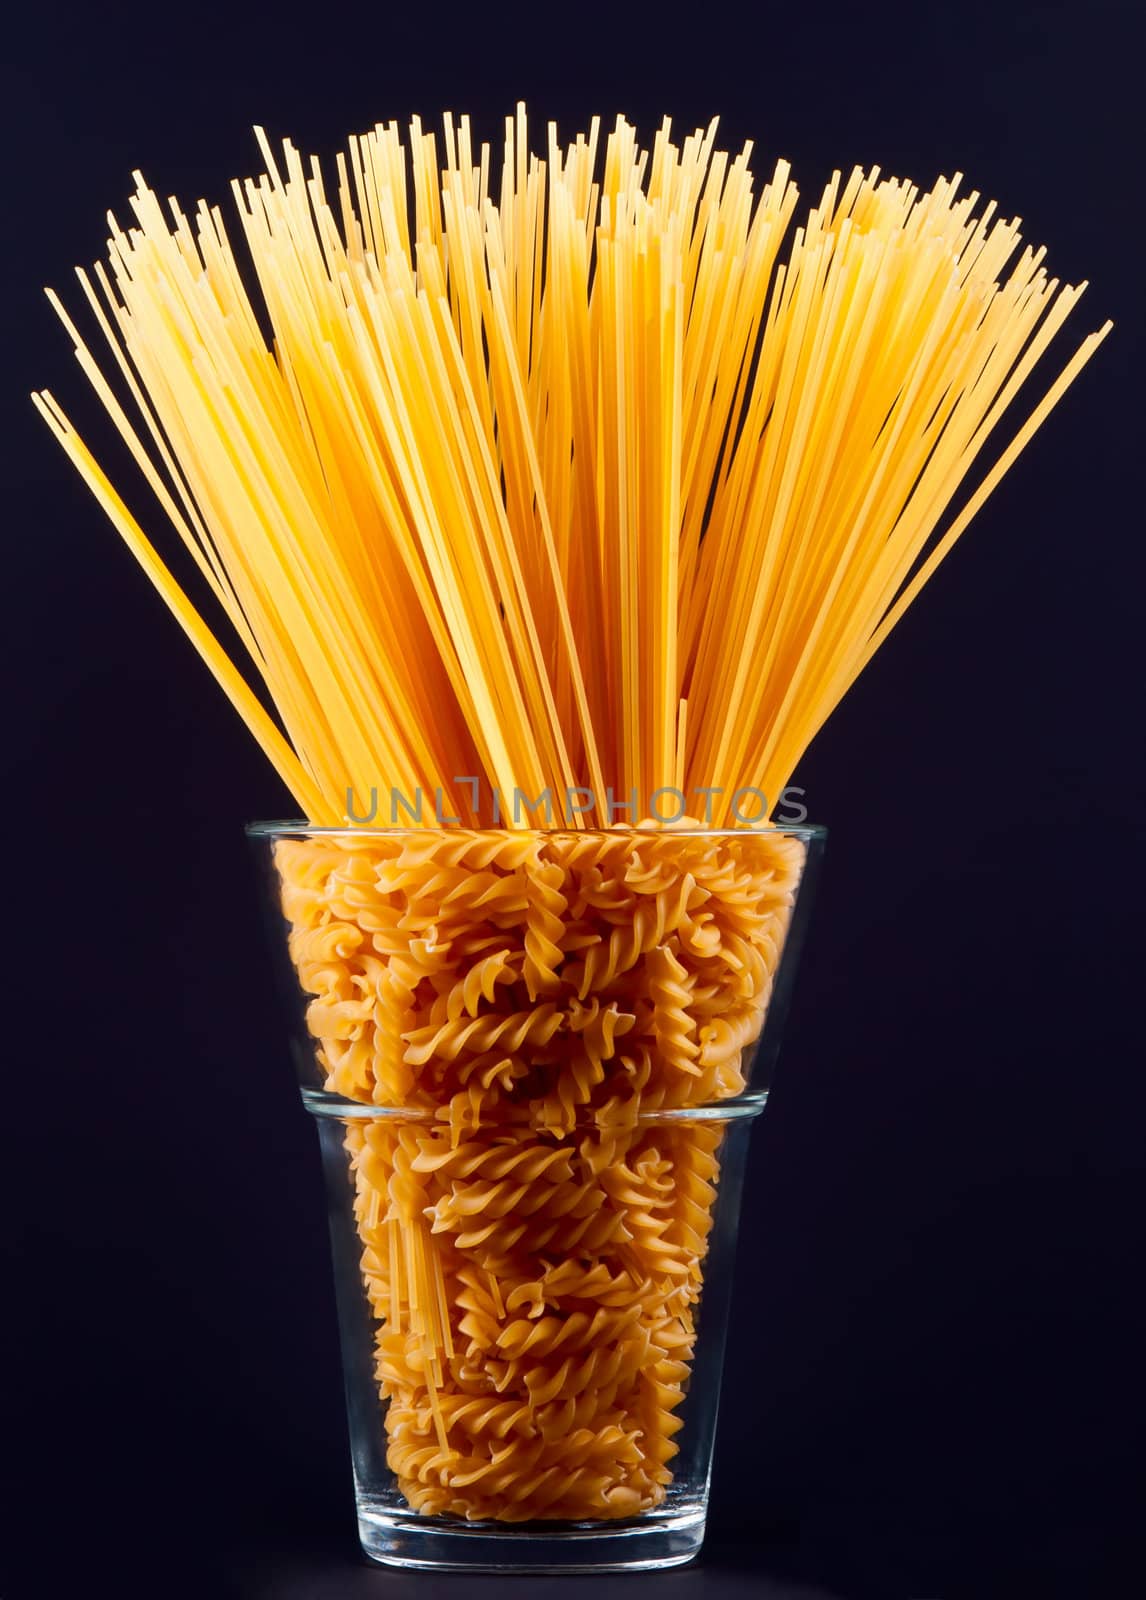 Spaghetti and pasta in vase  by Nanisimova